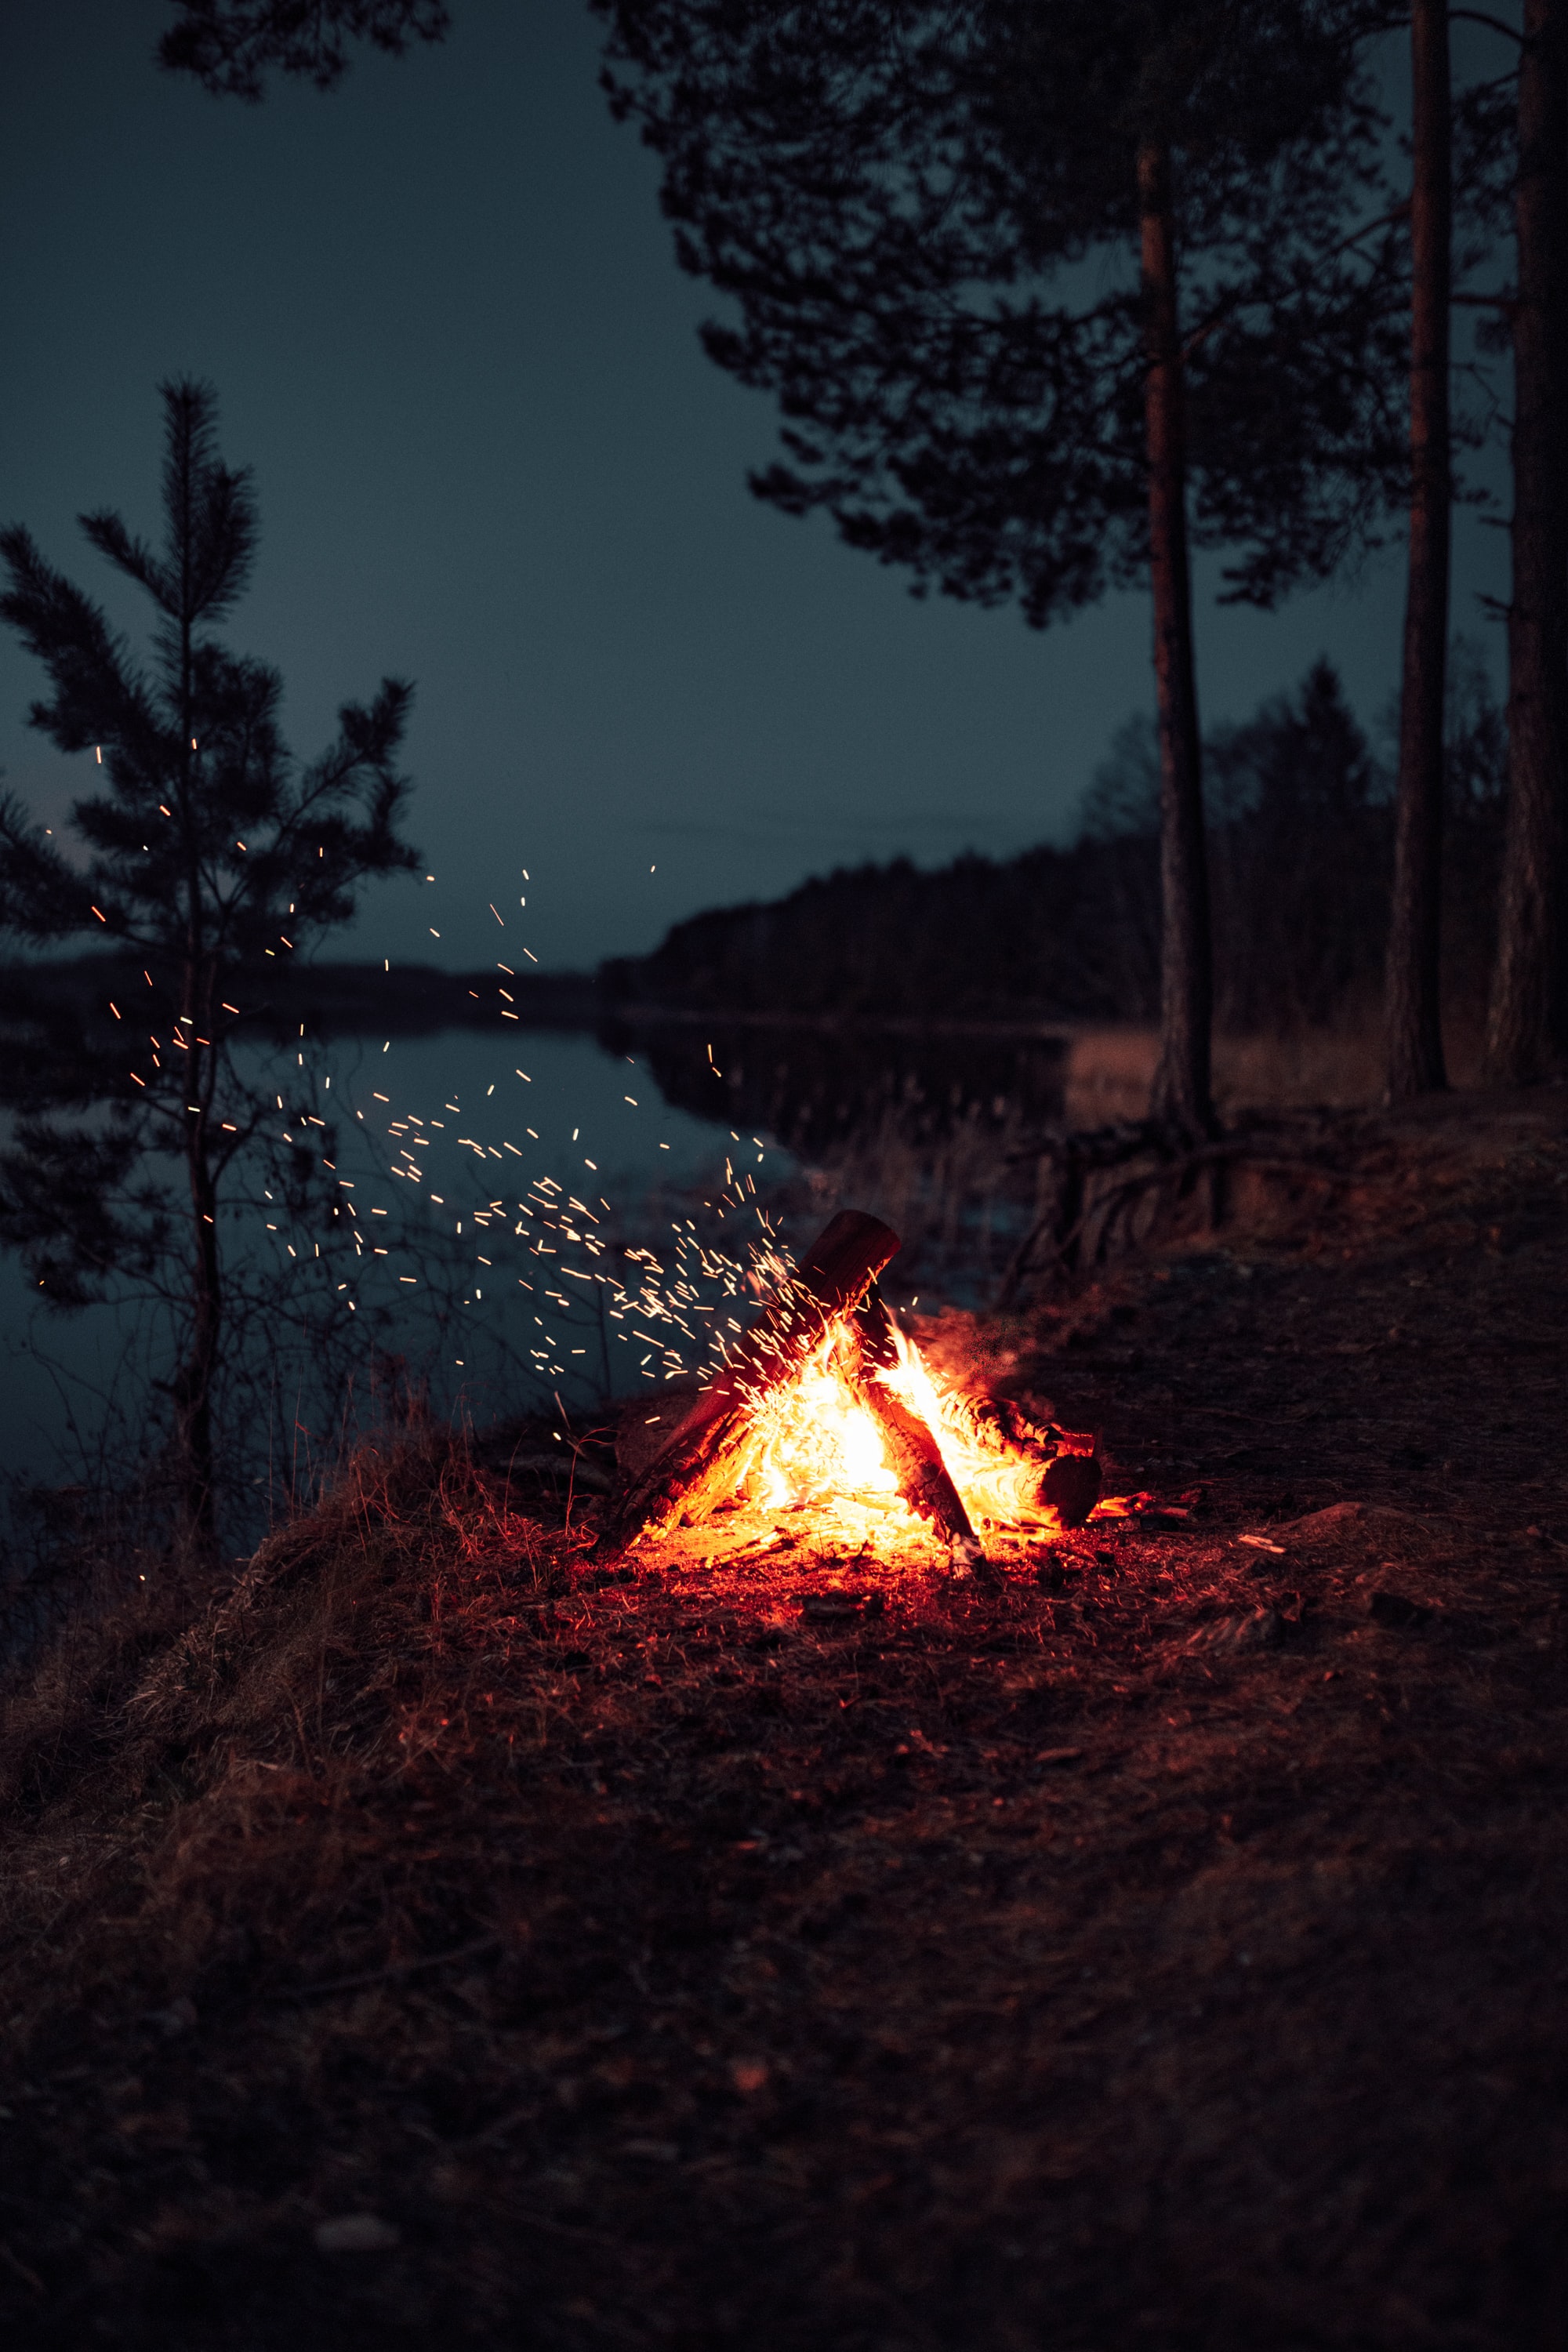 dark, bonfire, camping, campsite, night, sparks